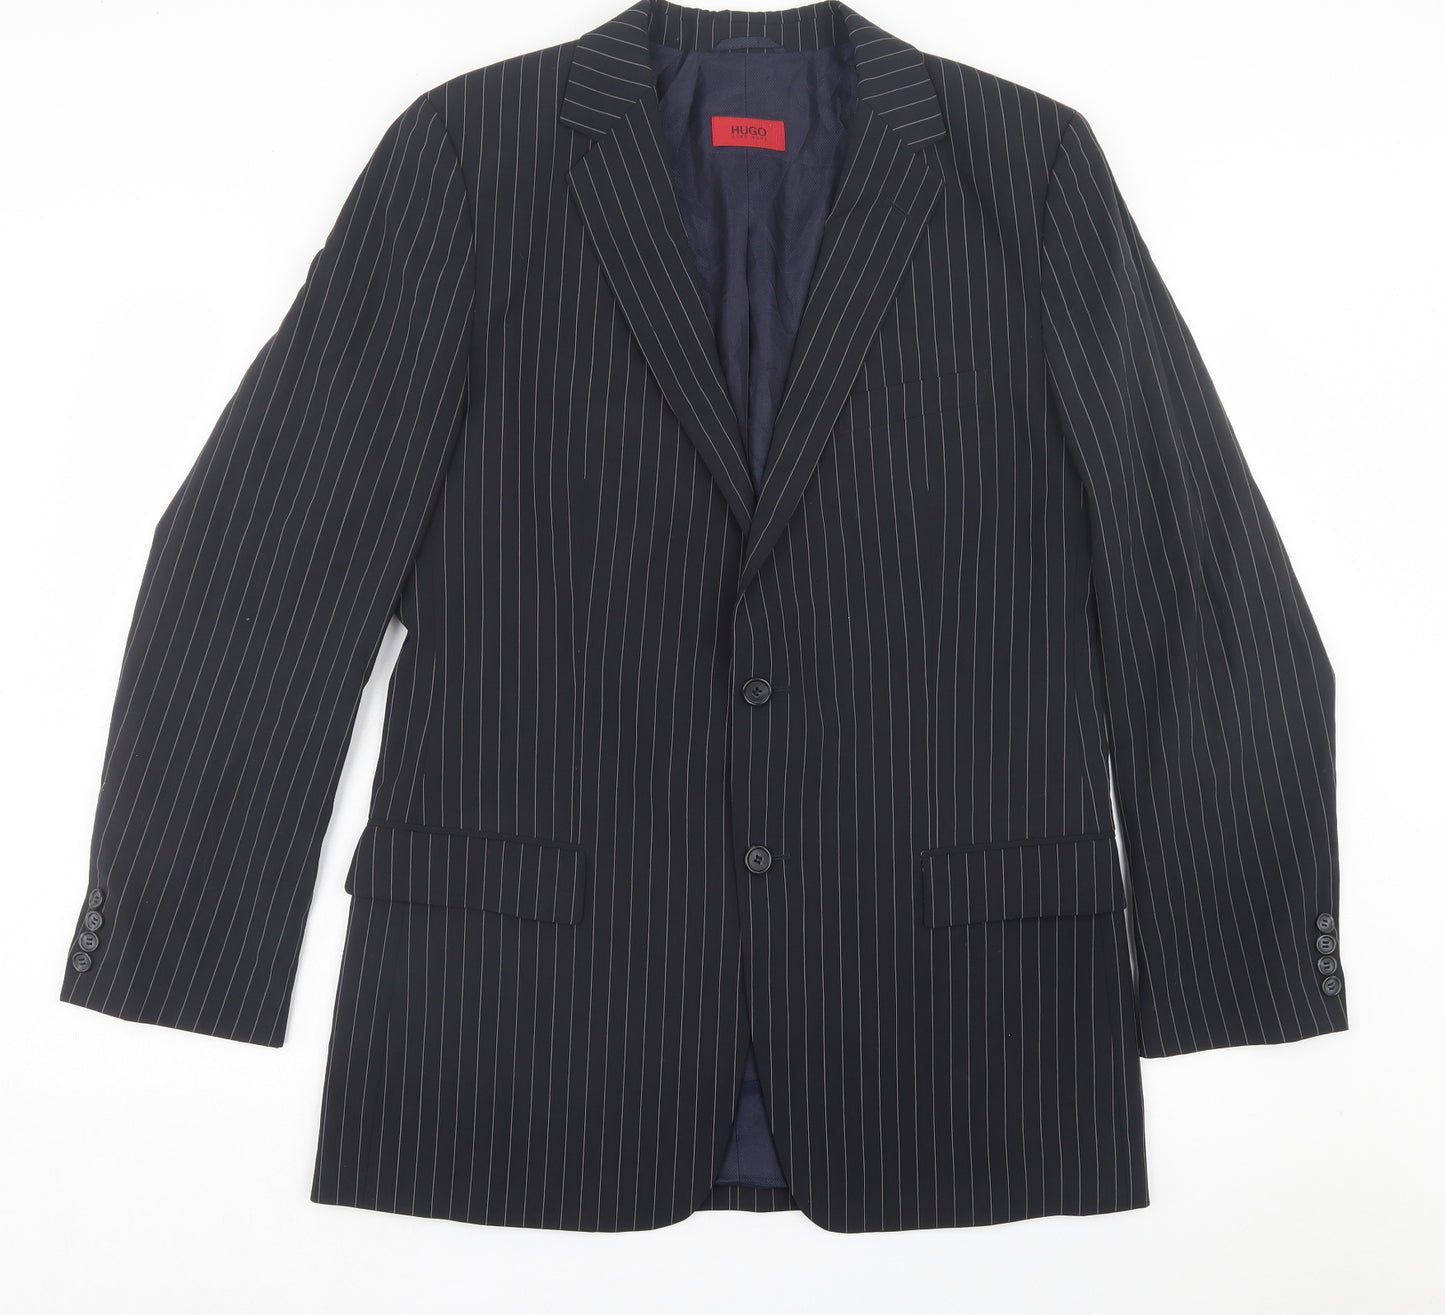 HUGO BOSS Mens Black Striped Wool Jacket Suit Jacket Size 40